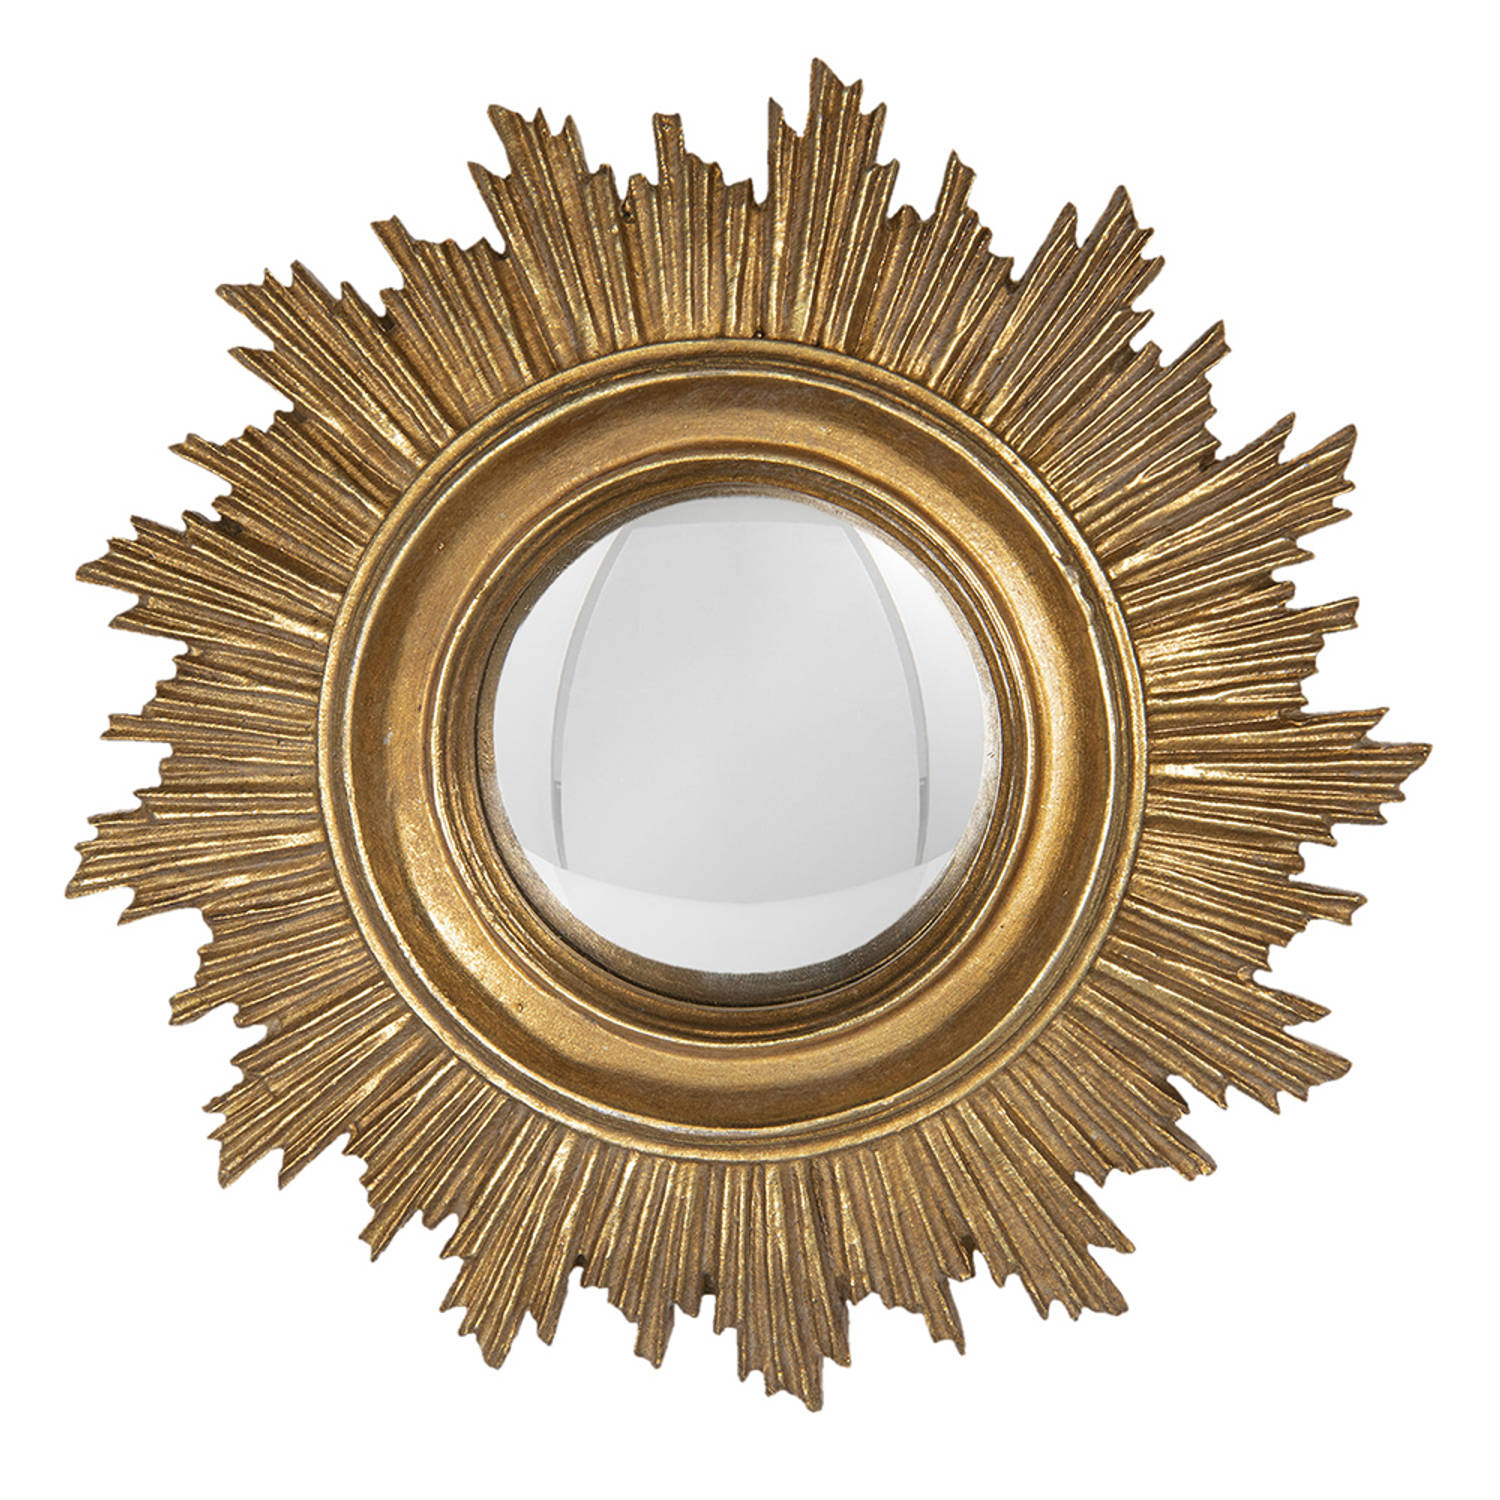 HAES DECO - Ronde Spiegel met versierde rand - Kleur Goudkleurig - Formaat Ø 18x2 cm - Materiaal Polyresin / Glas - Wandspiegel, Spiegel rond